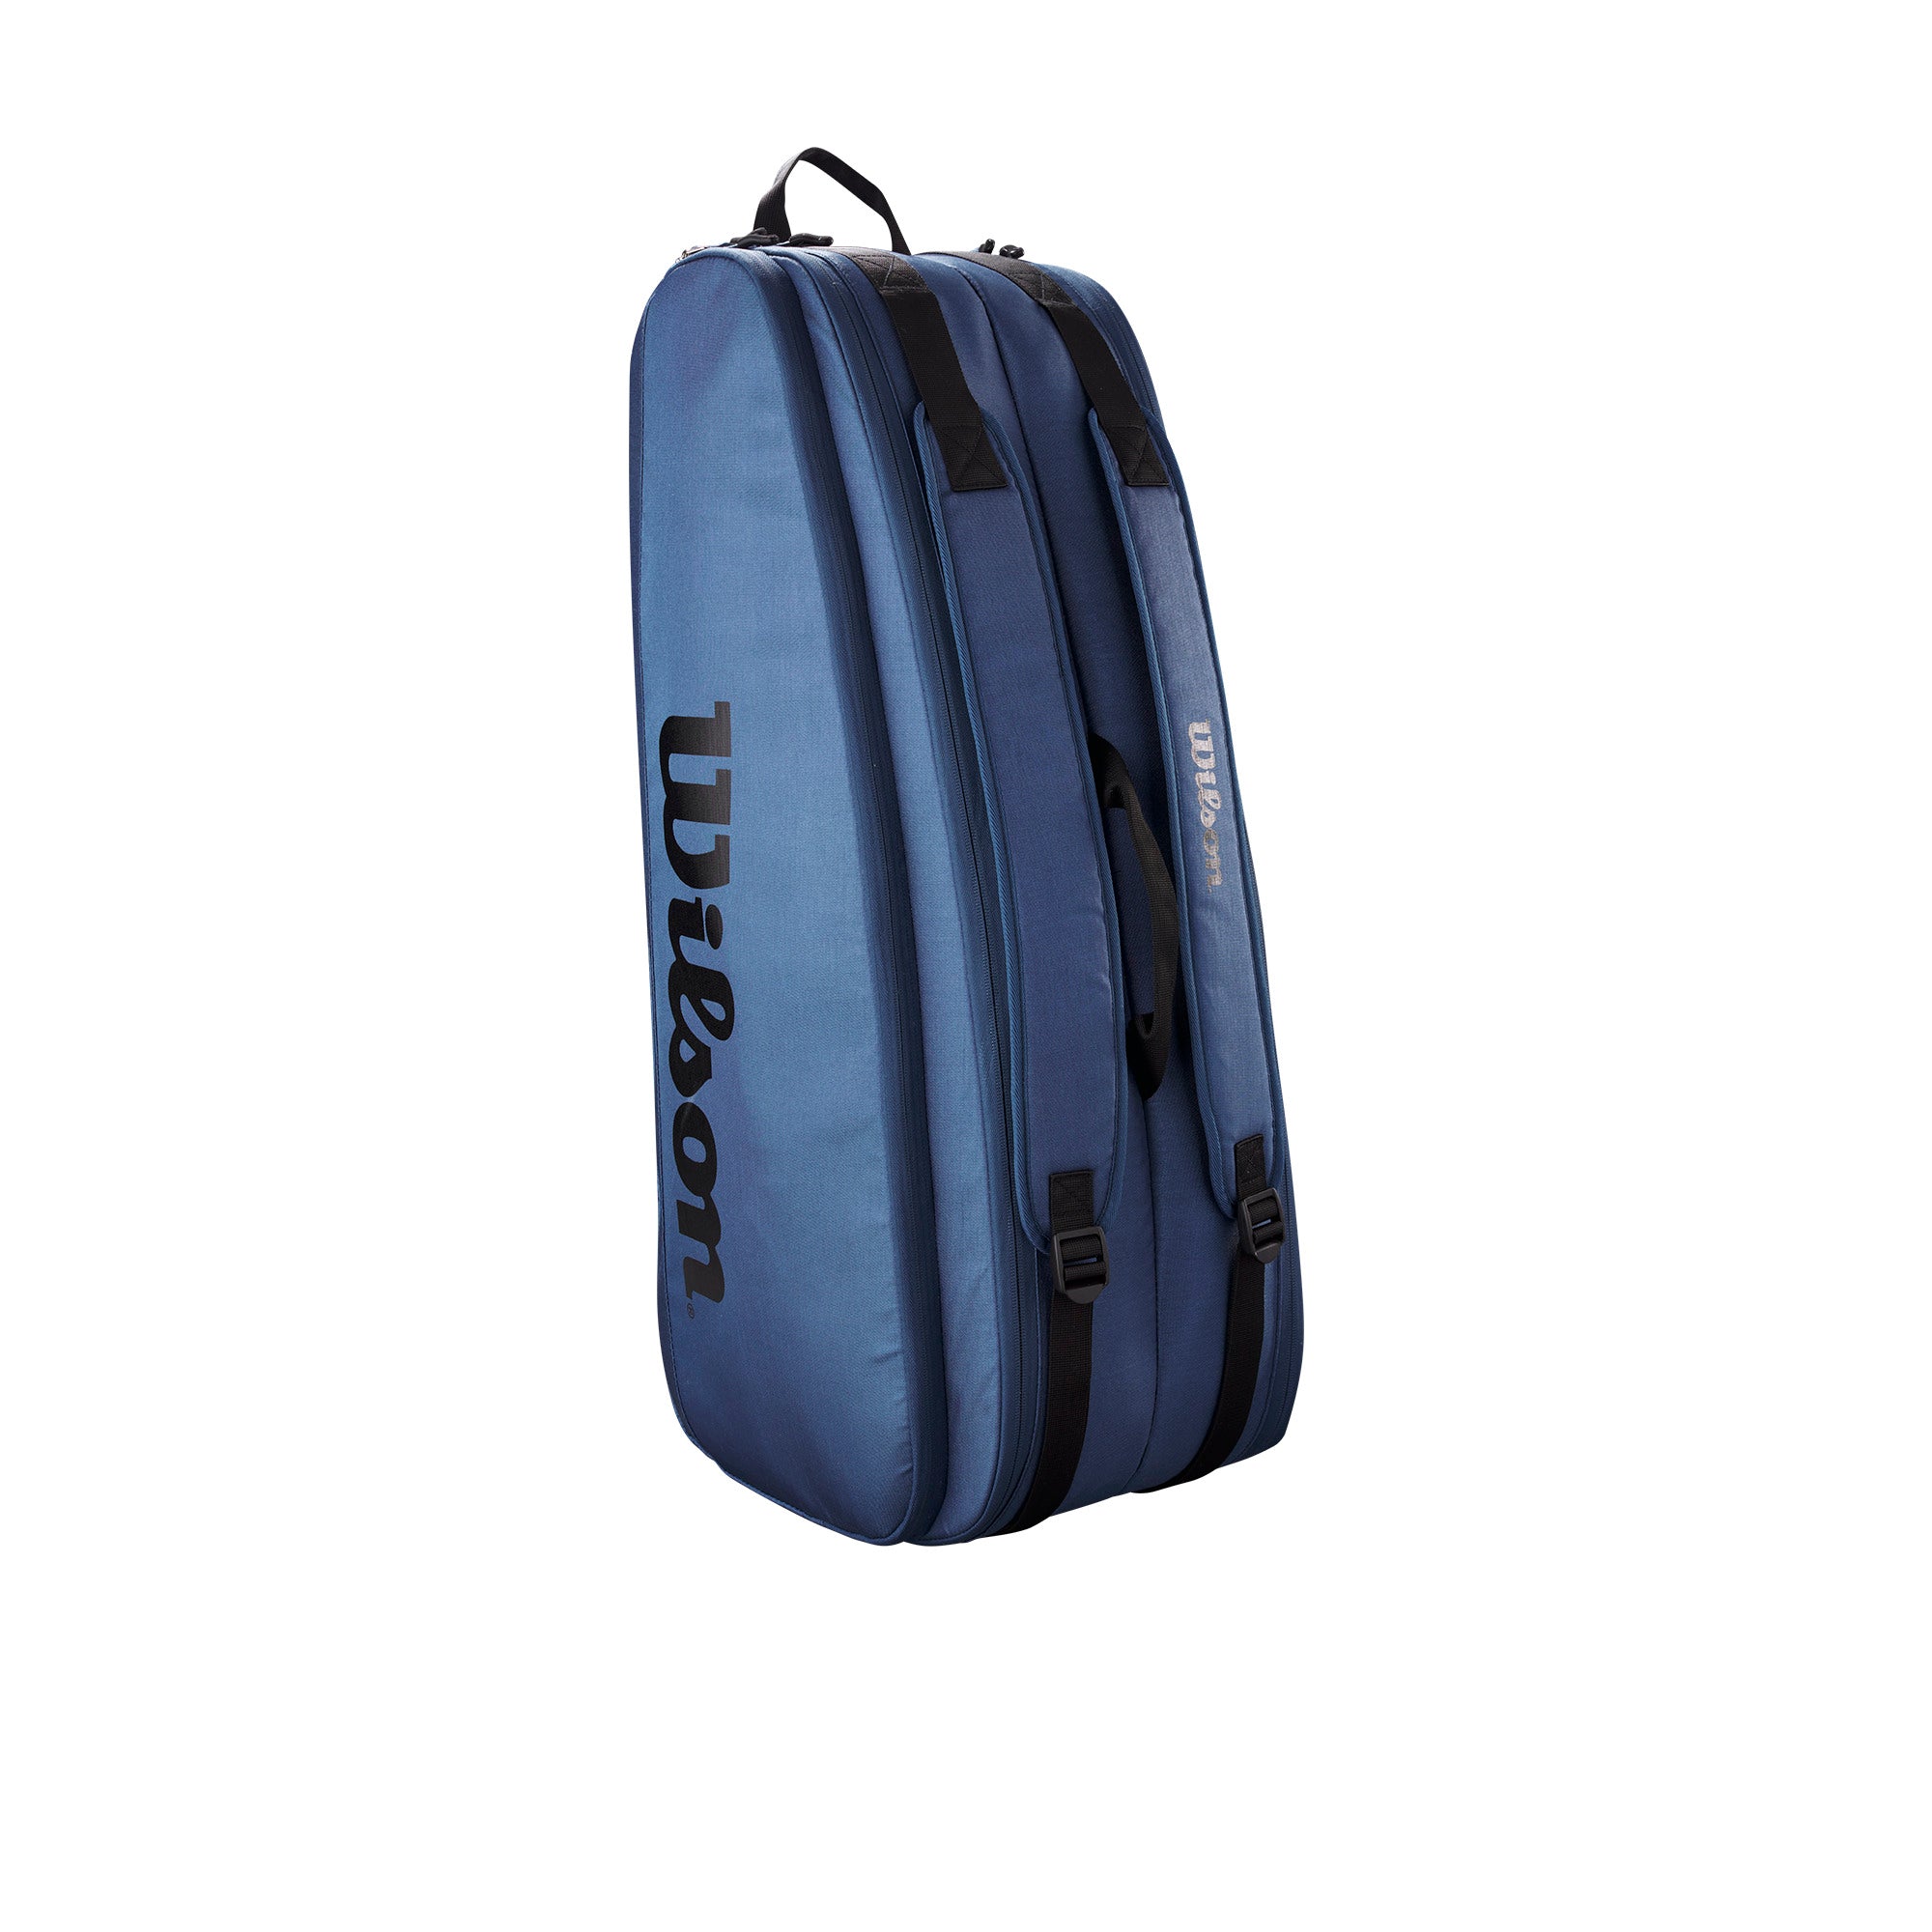 Wilson Ultra 6 Pack Bag - Blue